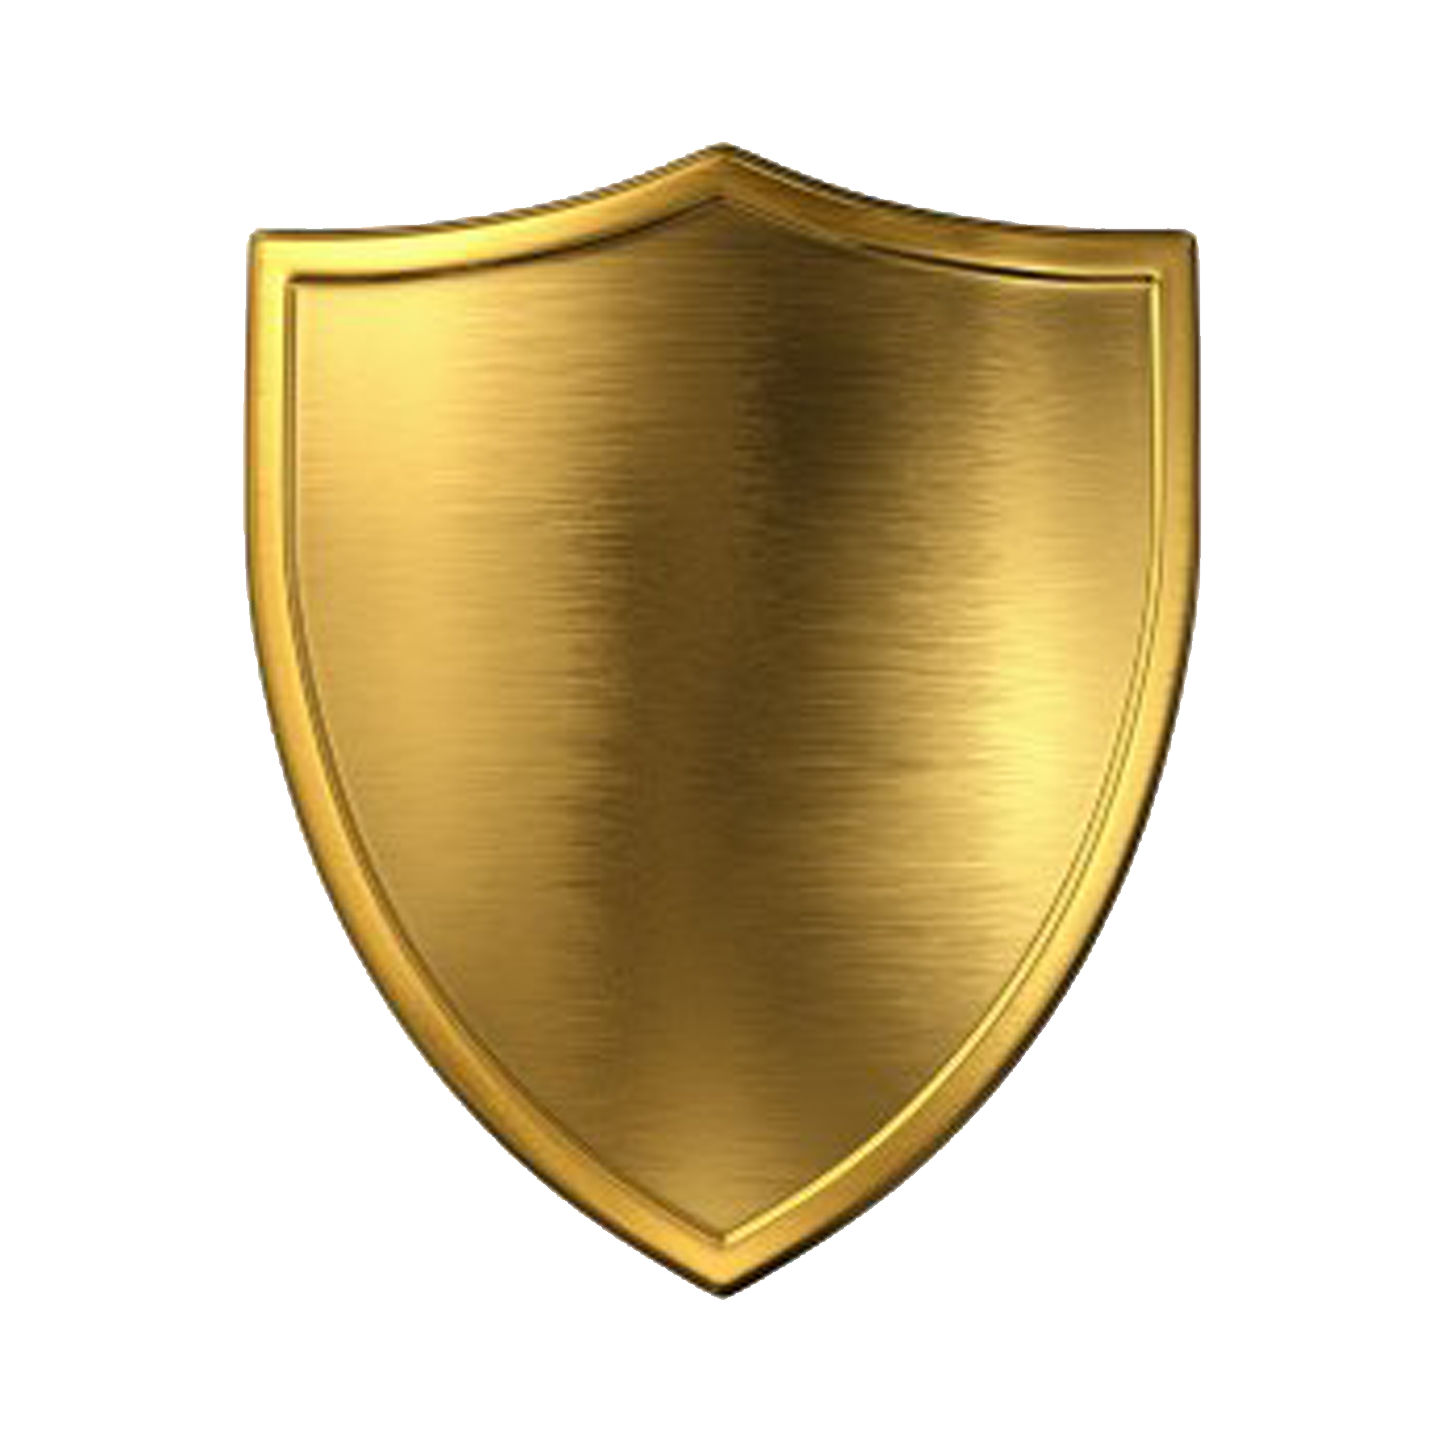 Gold Shield PNG Image